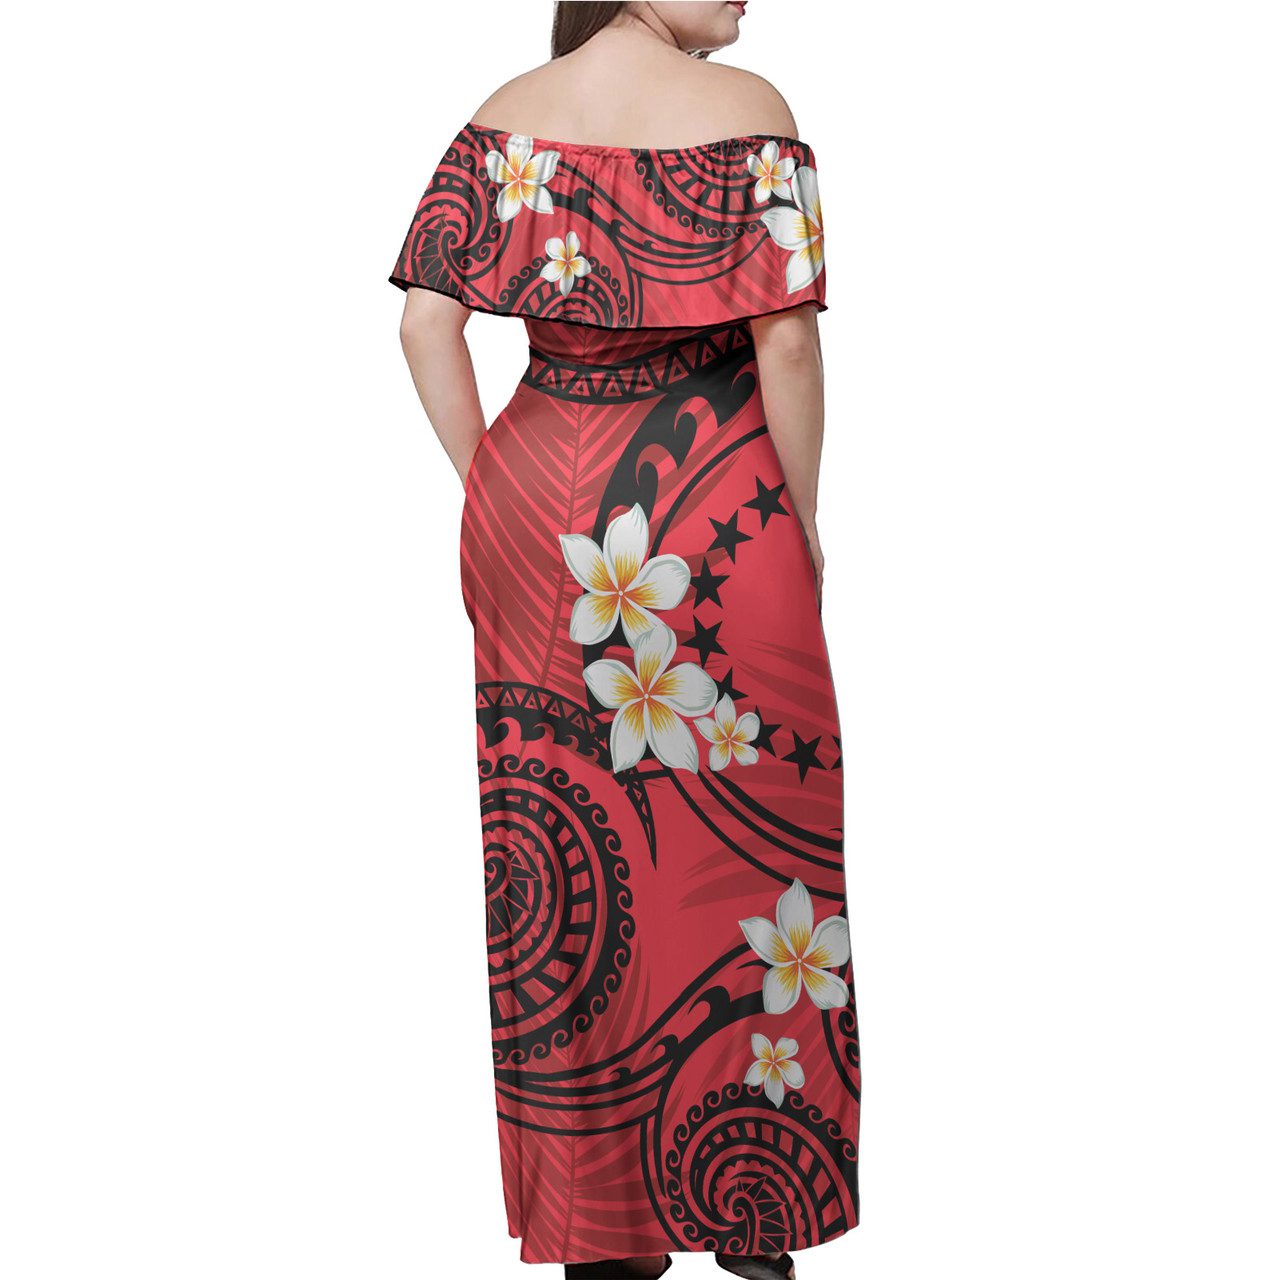 Cook Islands Off Shoulder Long Dress Plumeria Flowers Tribal Motif Red Version